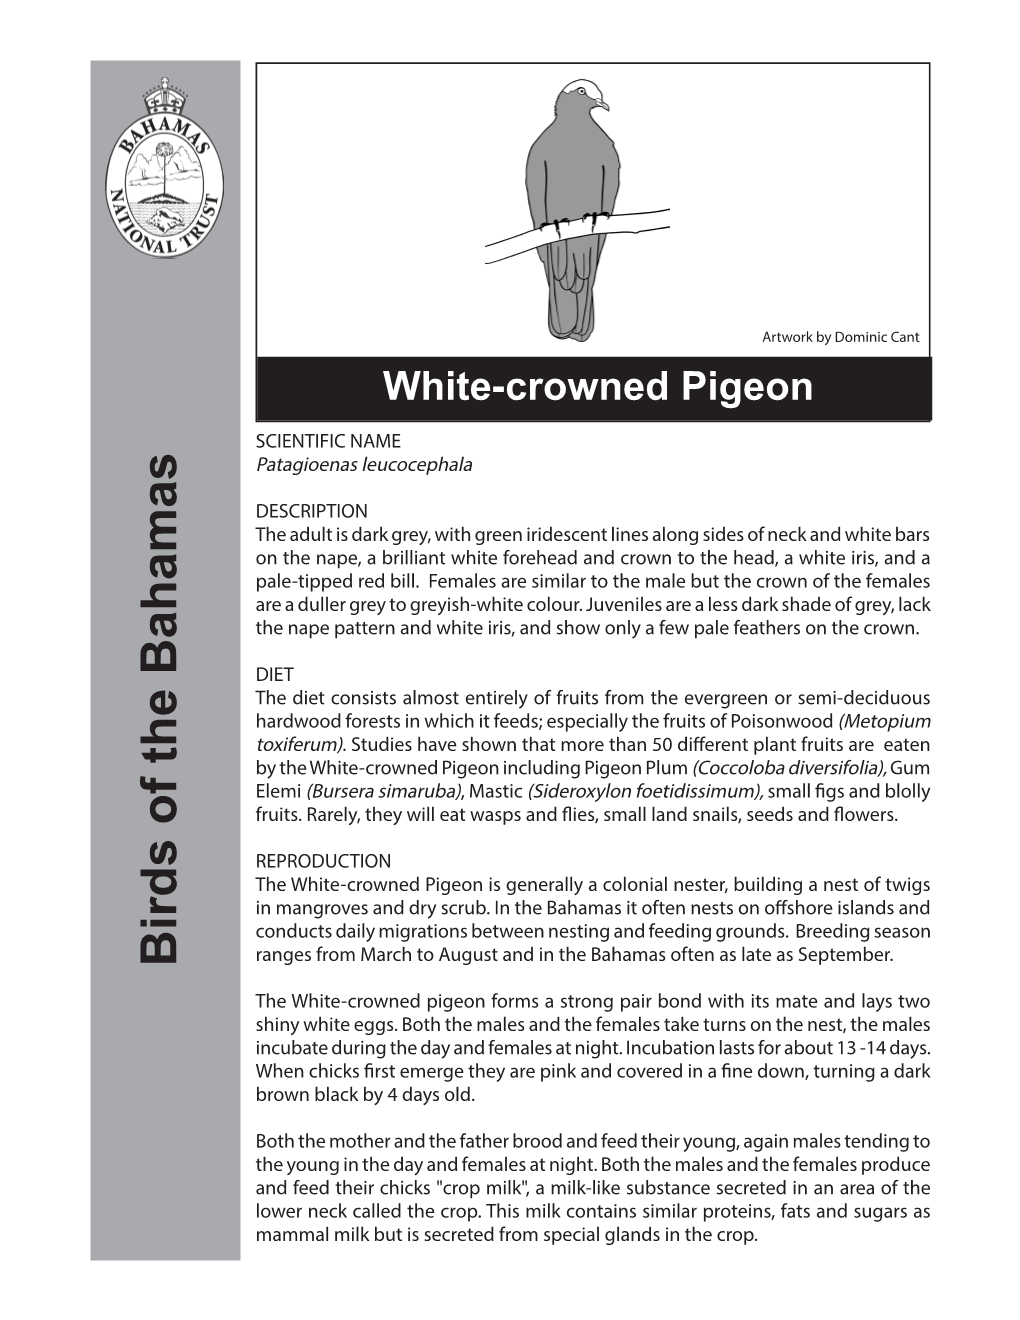 White-Crowned Pigeon SCIENTIFIC NAME Patagioenas Leucocephala